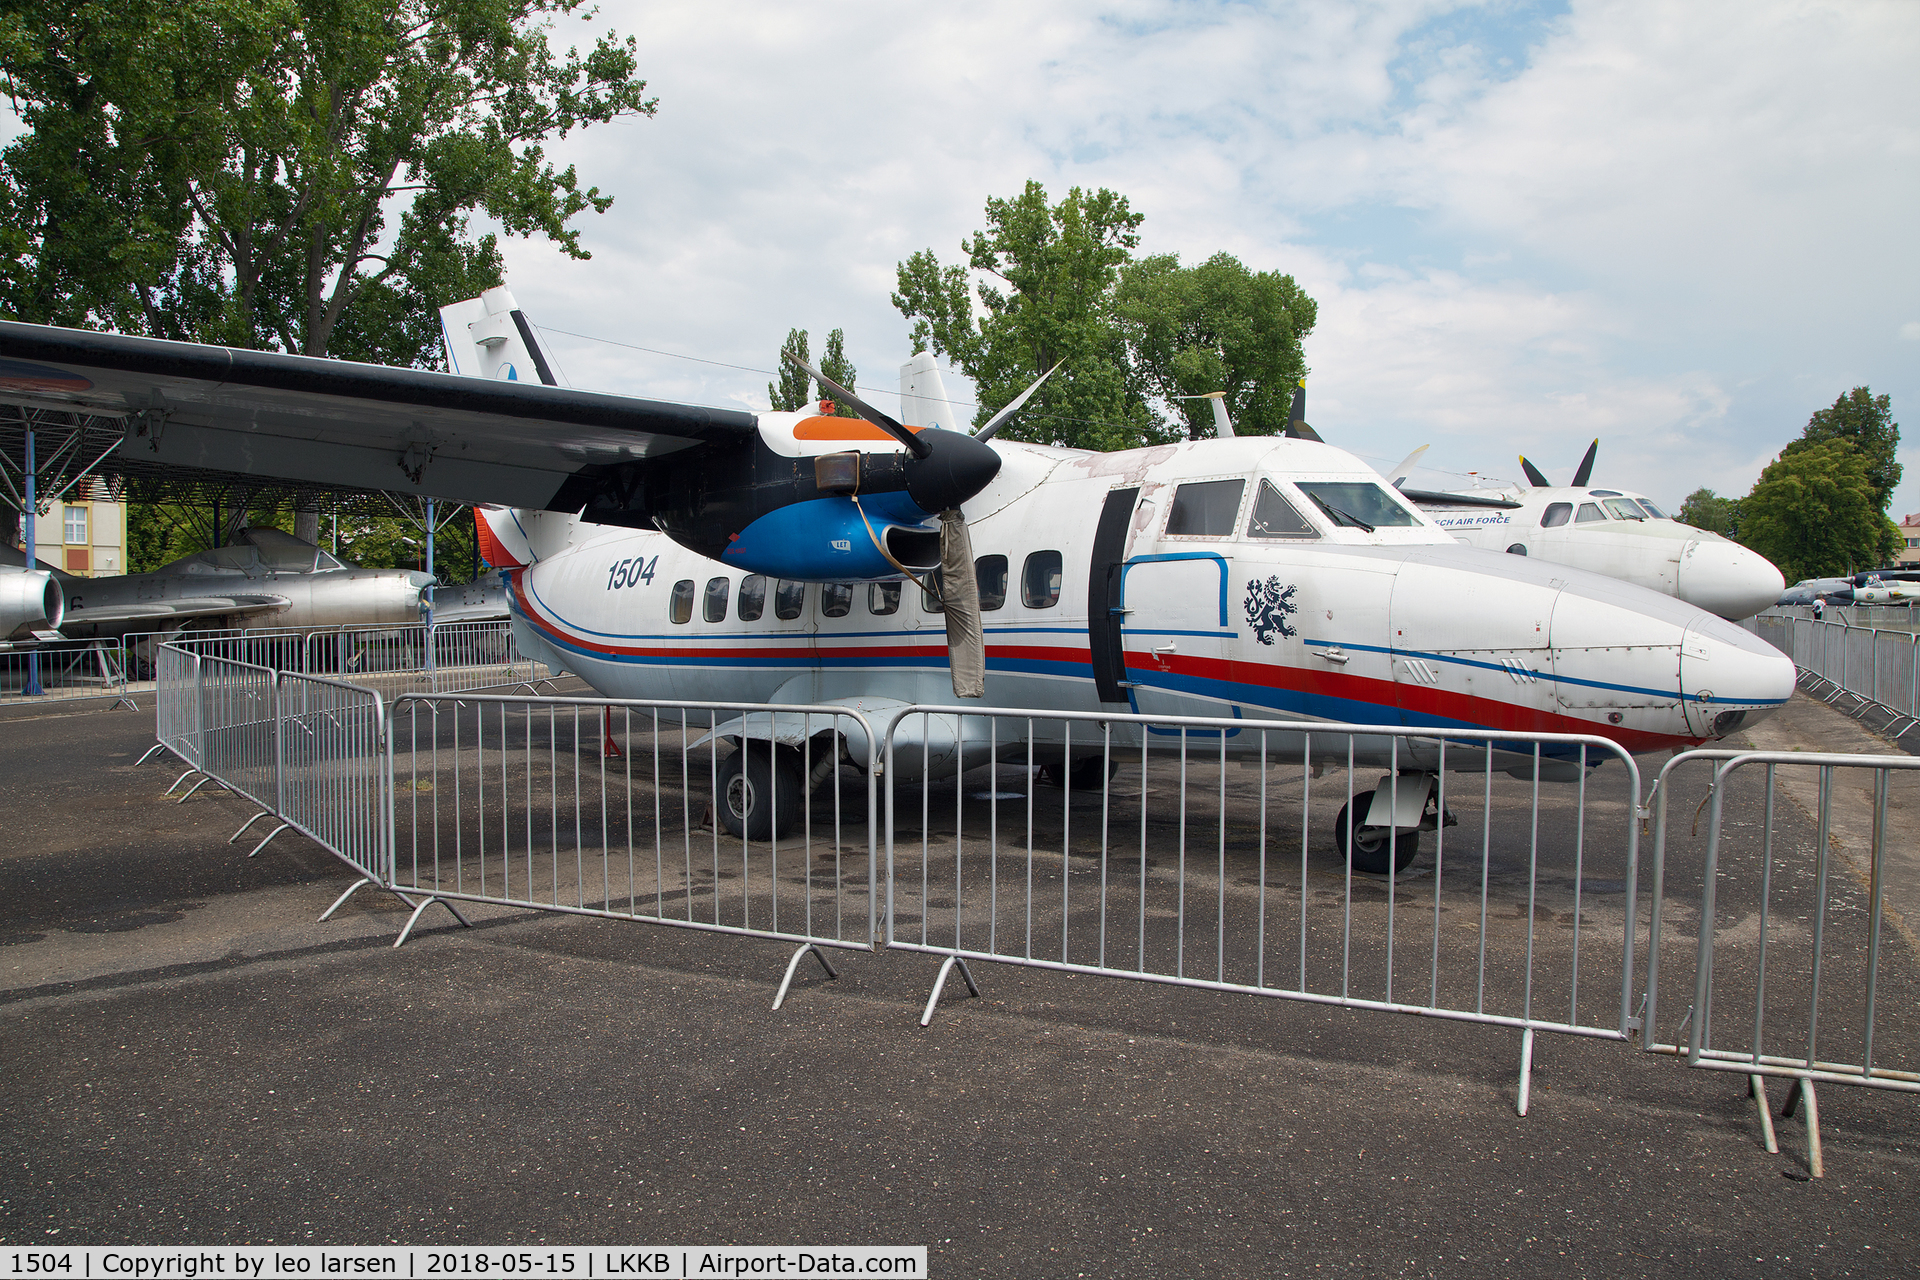 1504, 1985 Let L-410-UVP Turbolet C/N 851504, Kbely Air Museum 15.5.2018.ex CCCP-67537